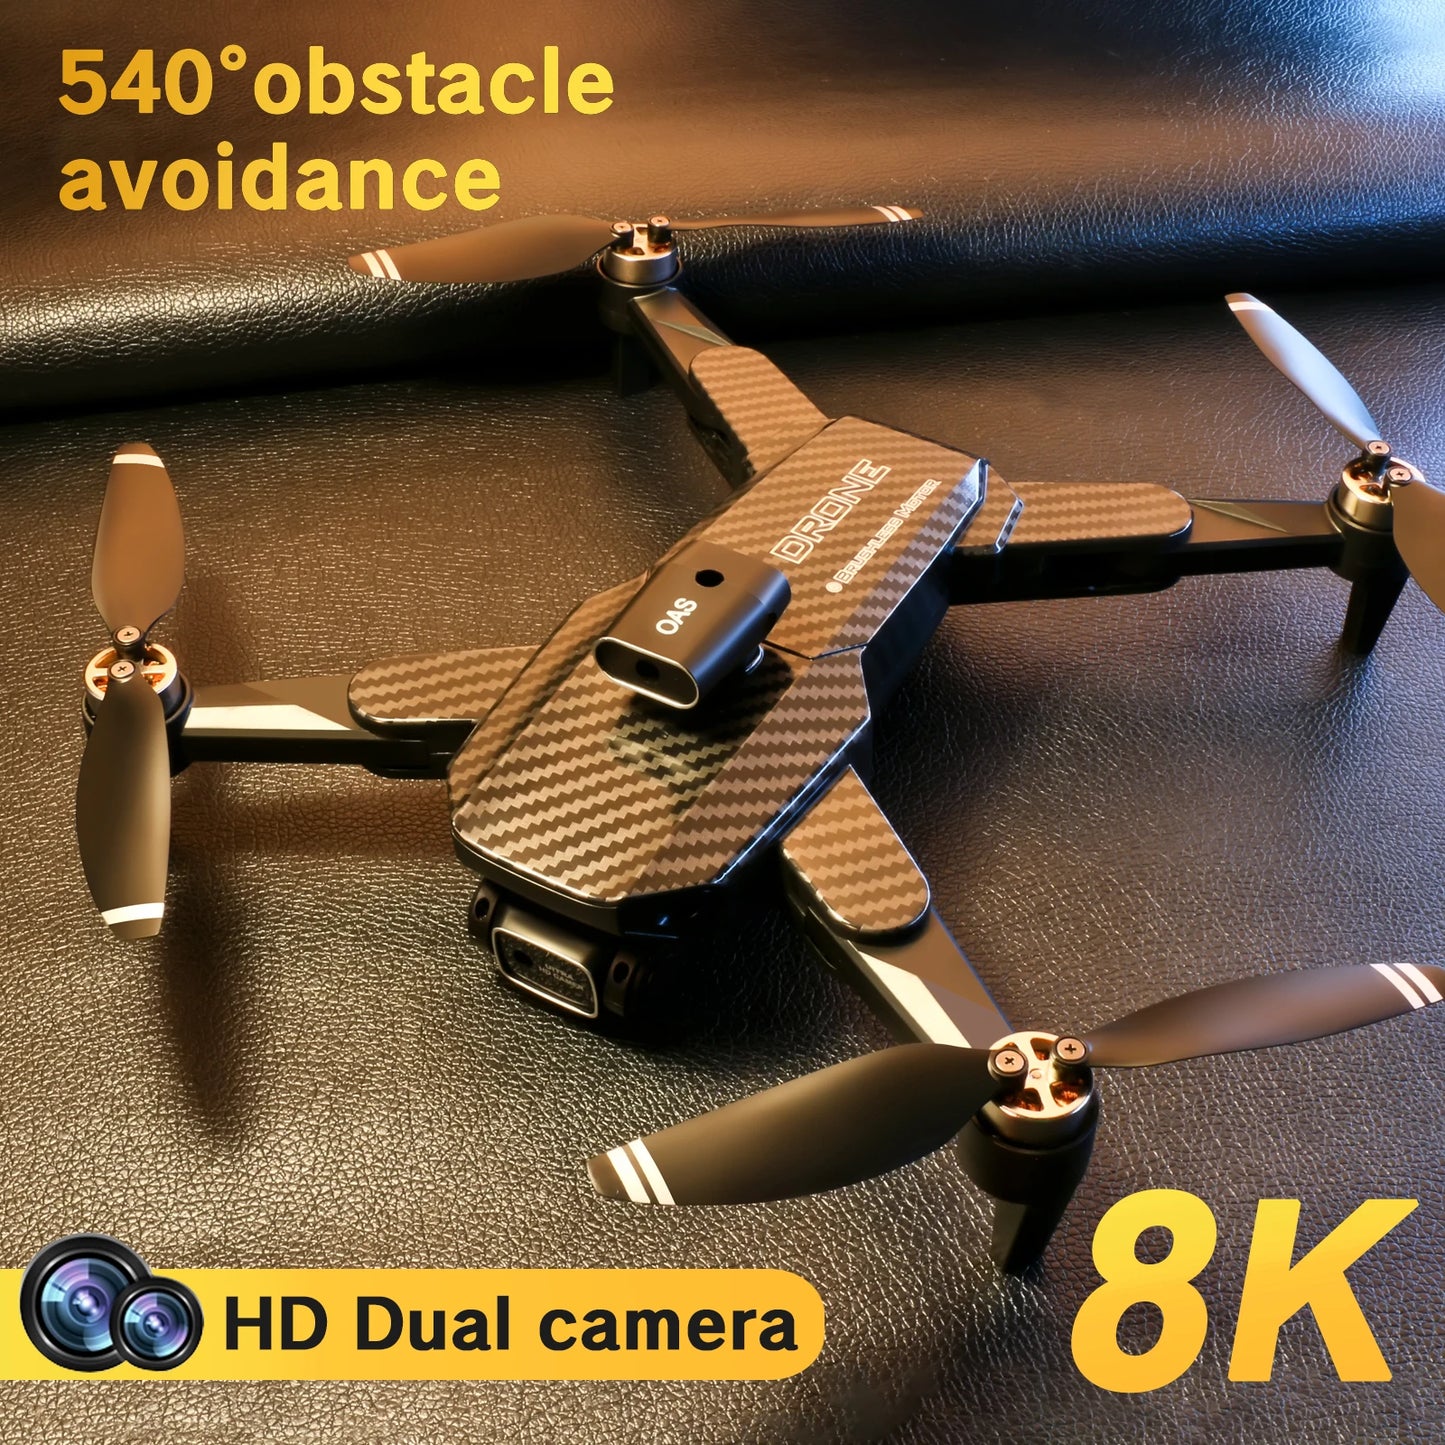 V162 Drone, 540*obstacle avoidance HD Dual camera 8K Oroe Miier 1